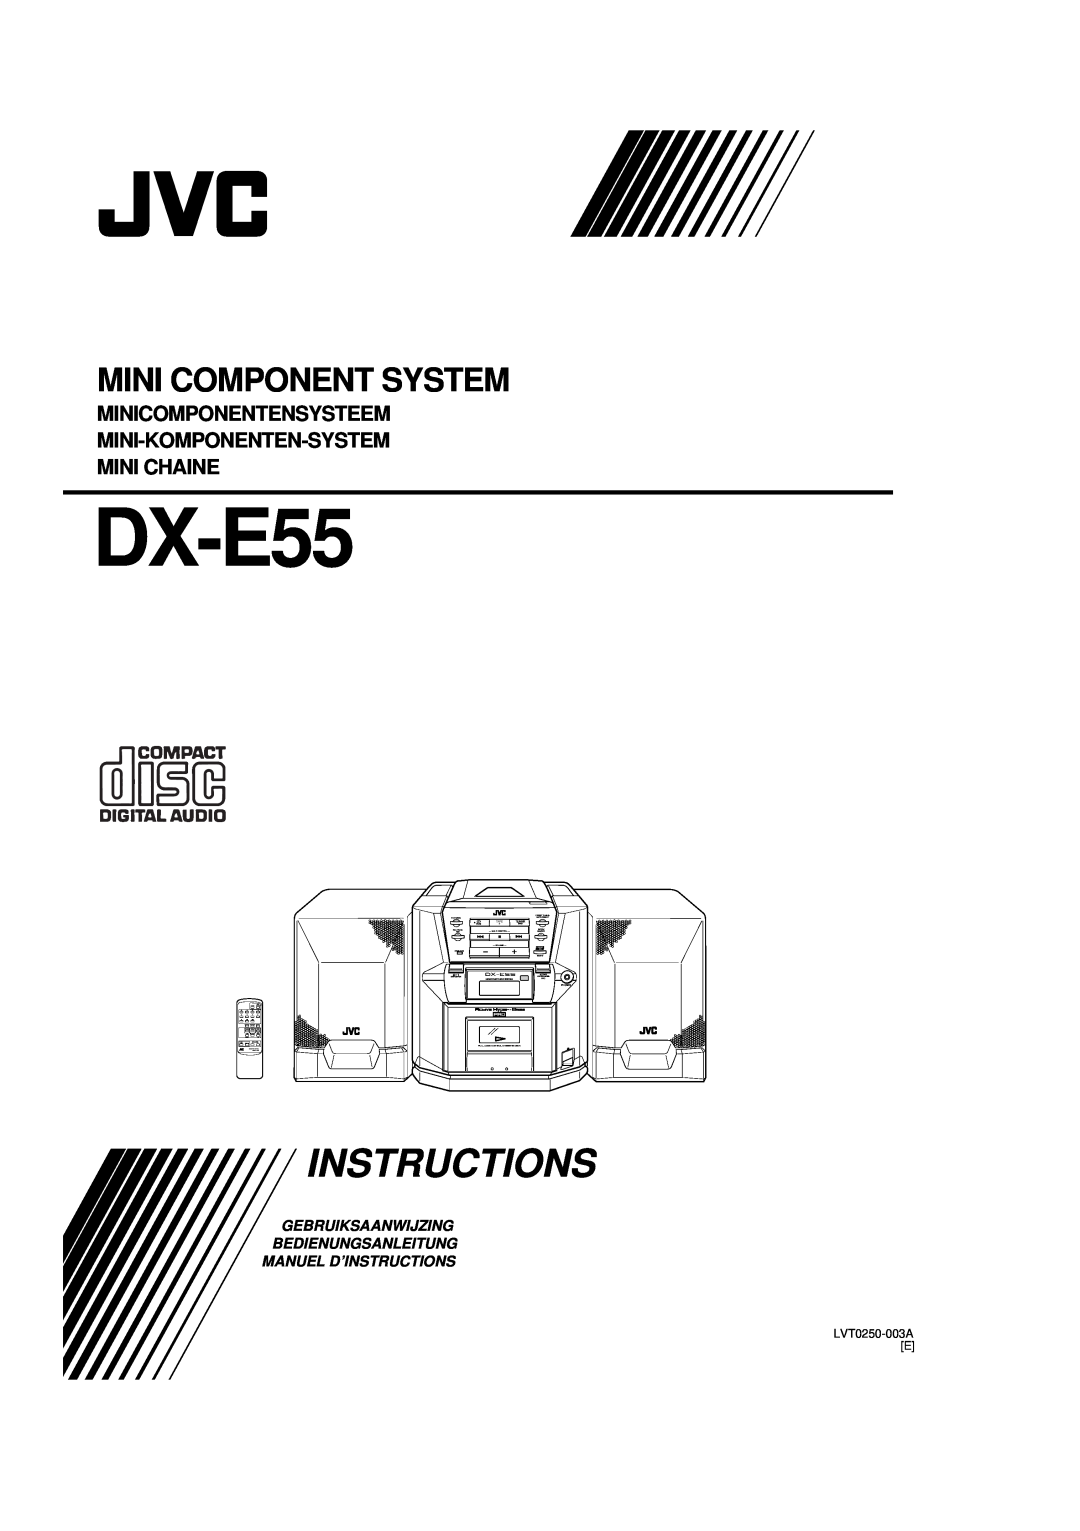 JVC DX-E55 manual Instructions, Mini Component System, Minicomponentensysteem Mini-Komponenten-System, Mini Chaine, Tape 